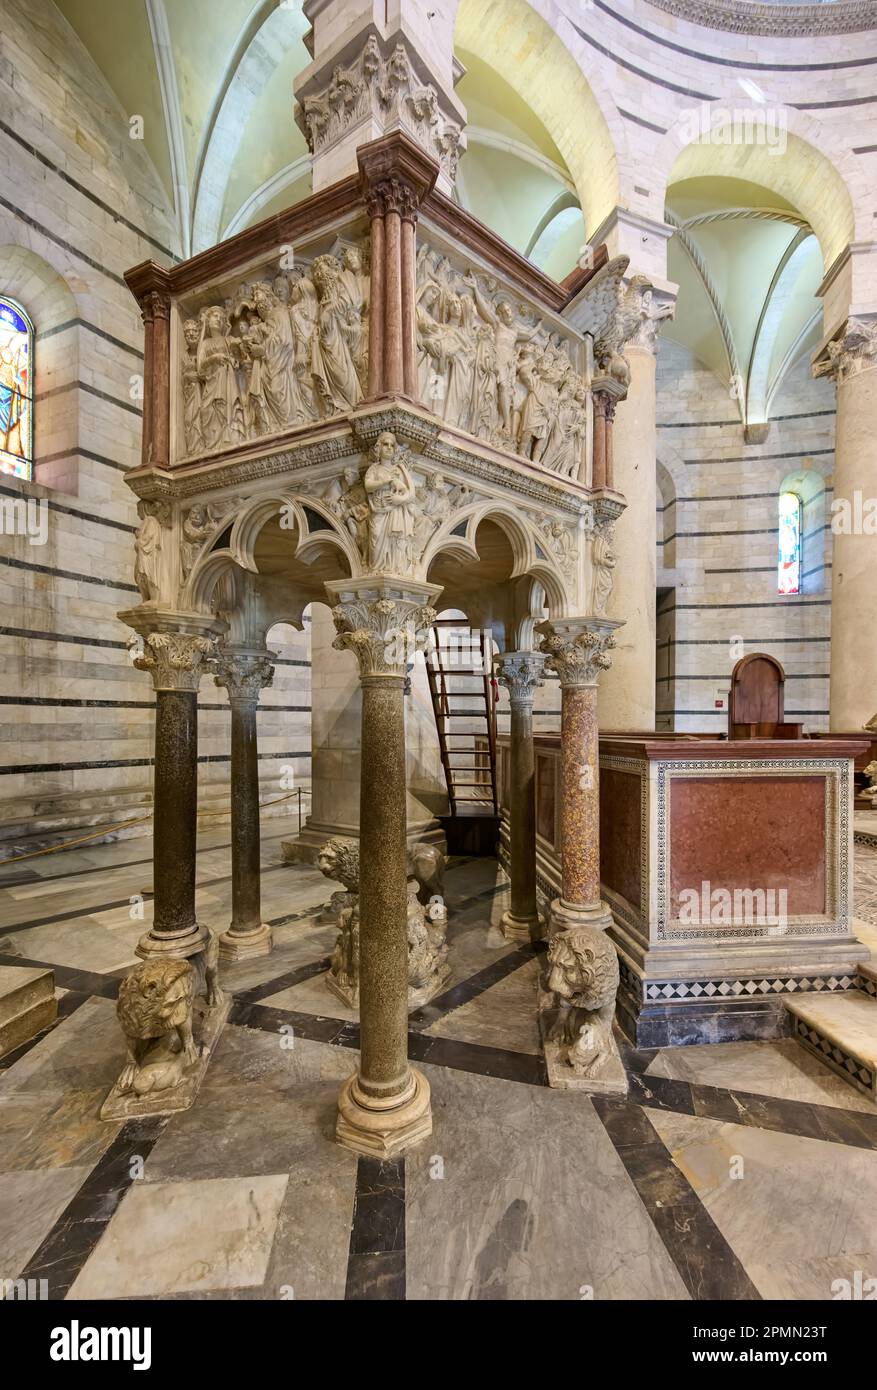 pulpit, interior shot of The Baptistry of St. John, Battistero di San Giovanni, Pisa, Tuscany, Italy Stock Photo